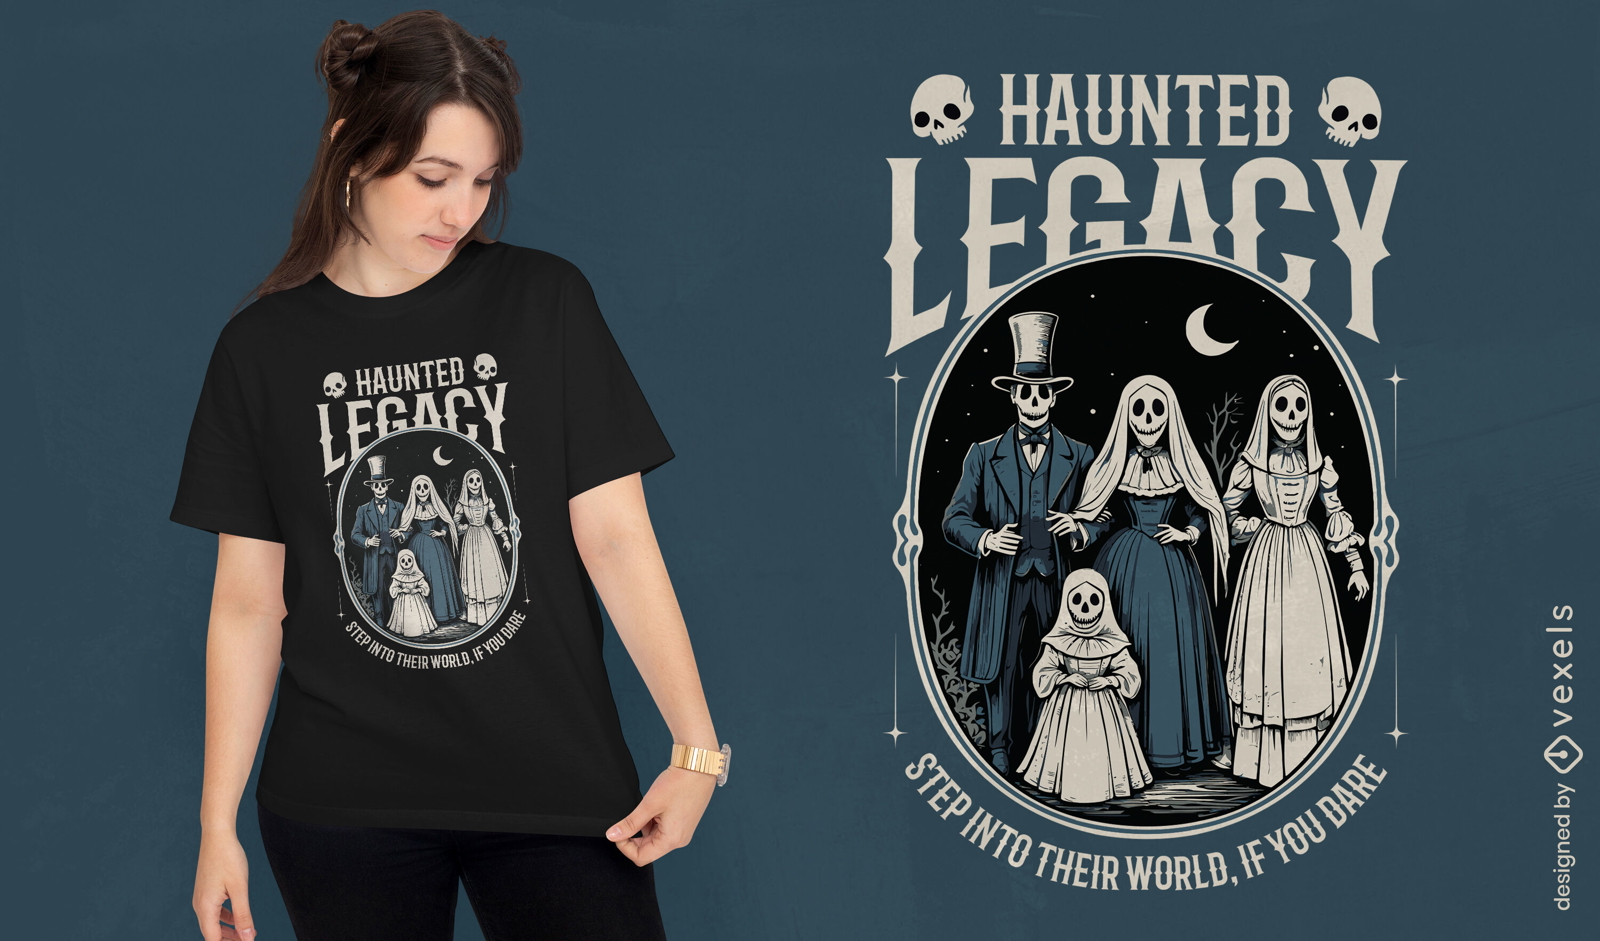 Haunted legacy t-shirt design